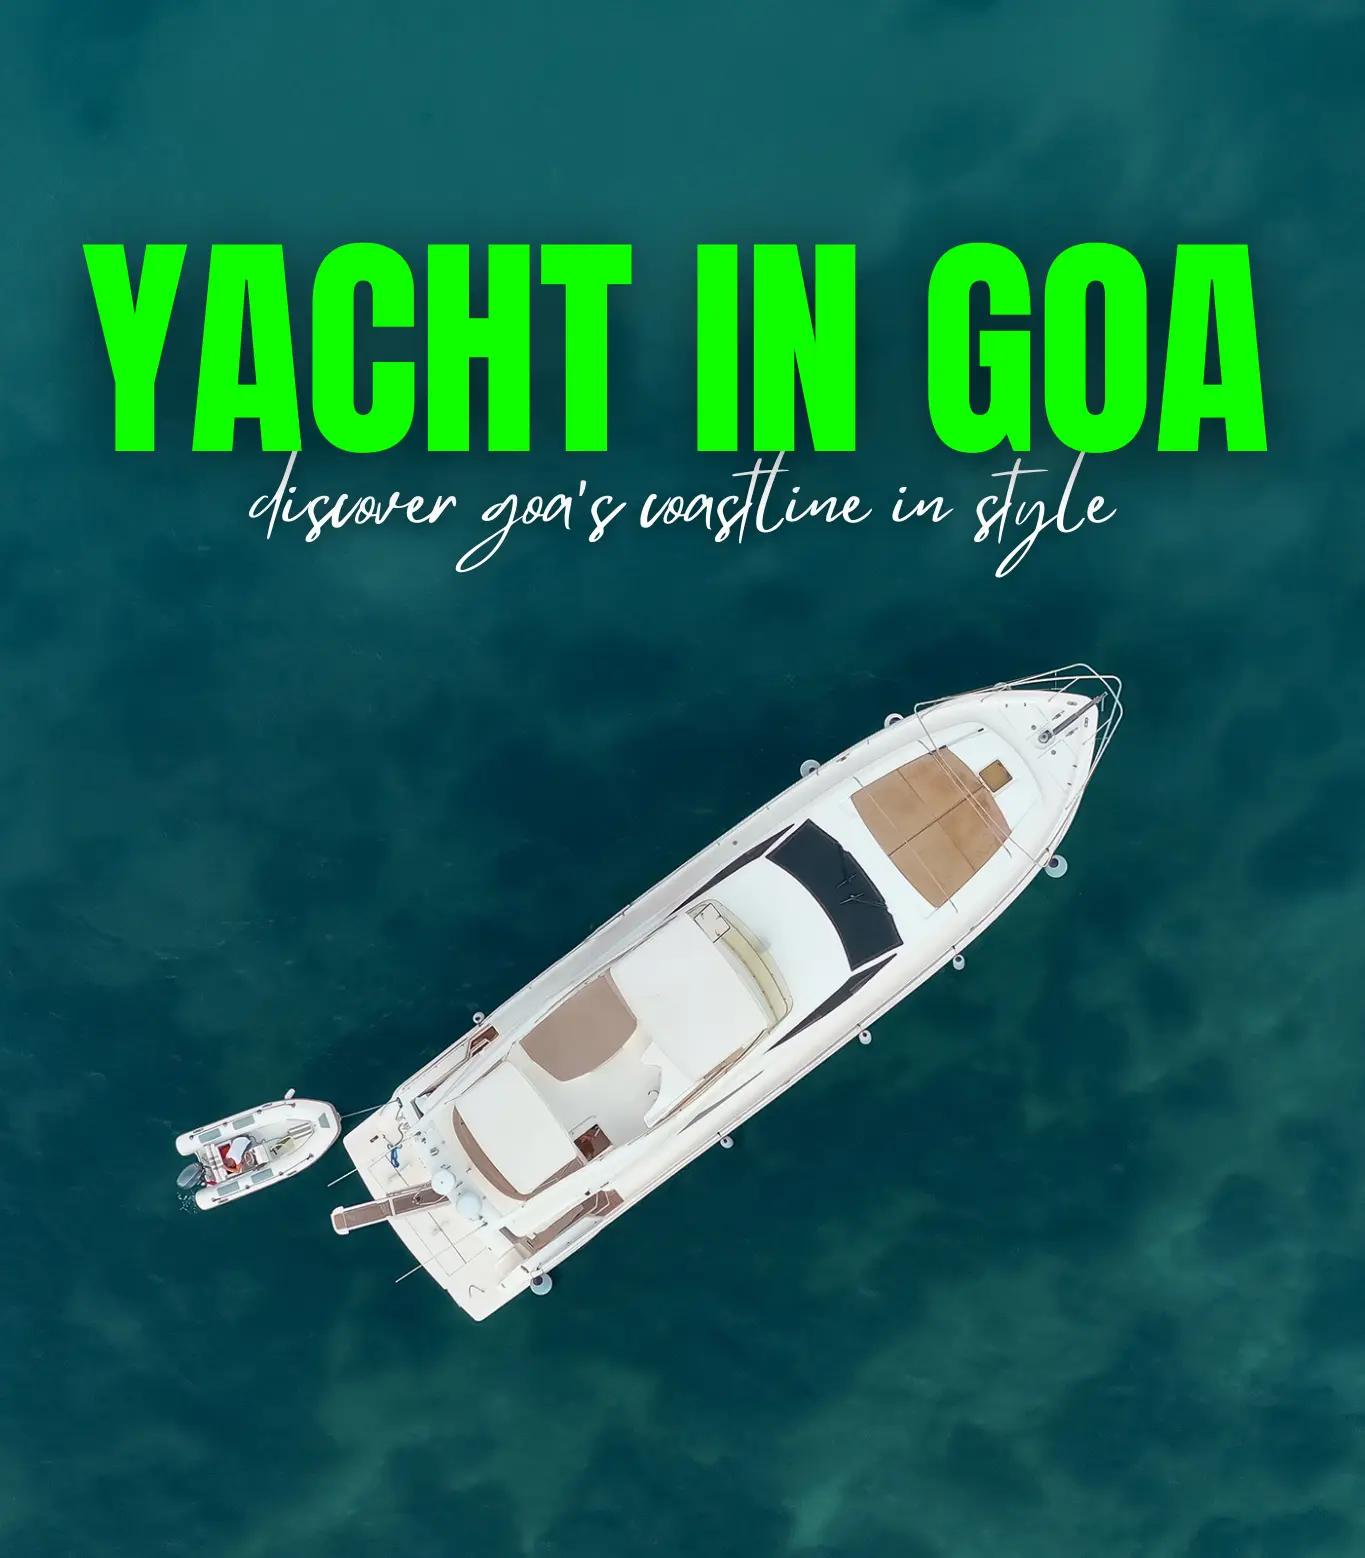 Private Yacht In Goa